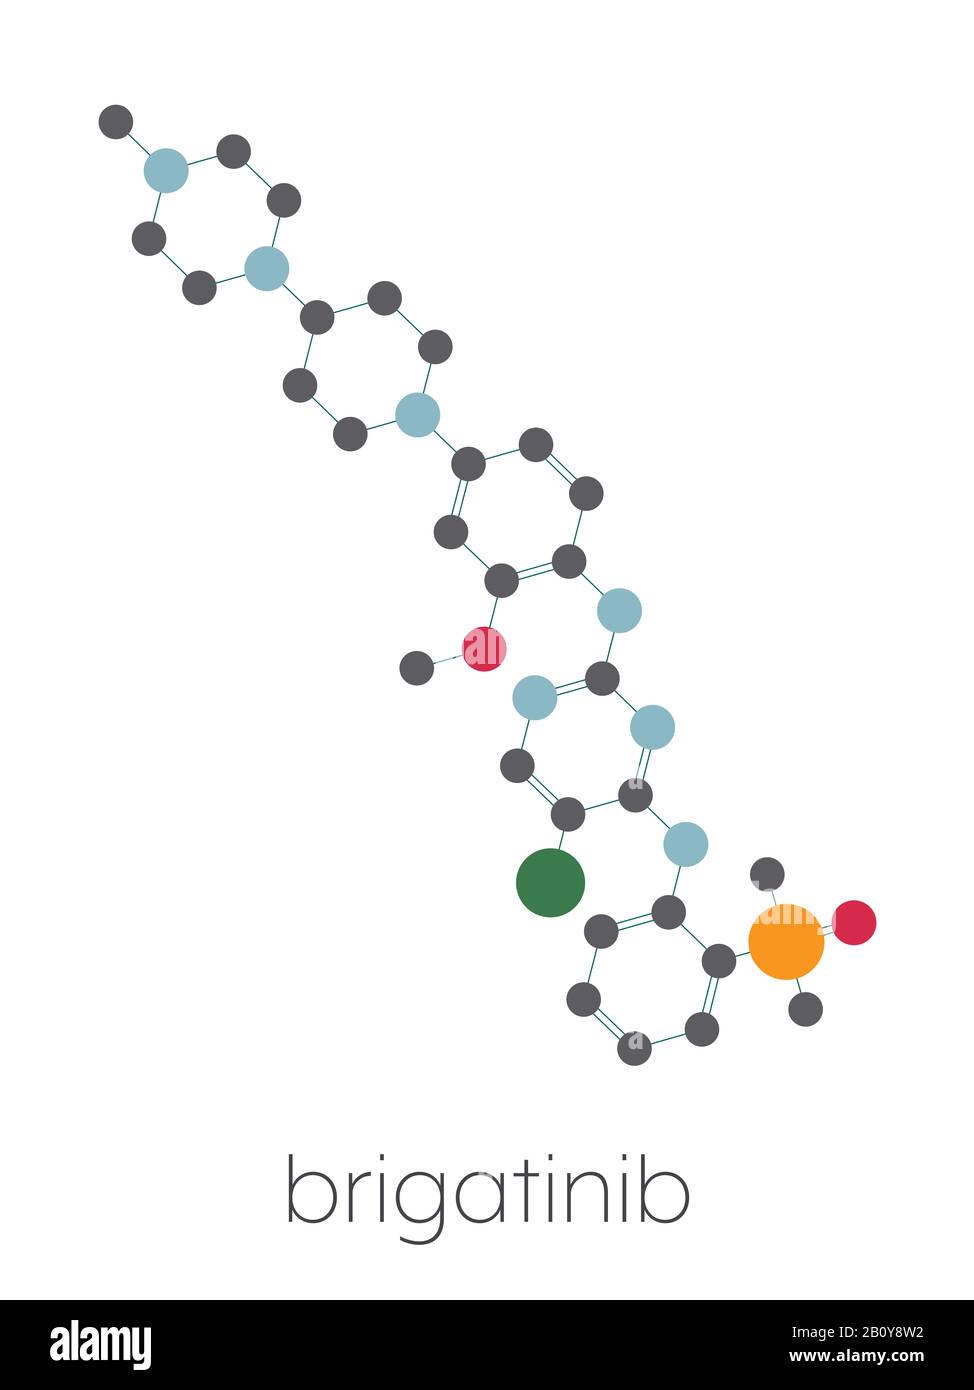 Brigatinib cancer drug molecule, illustration Stock Photo